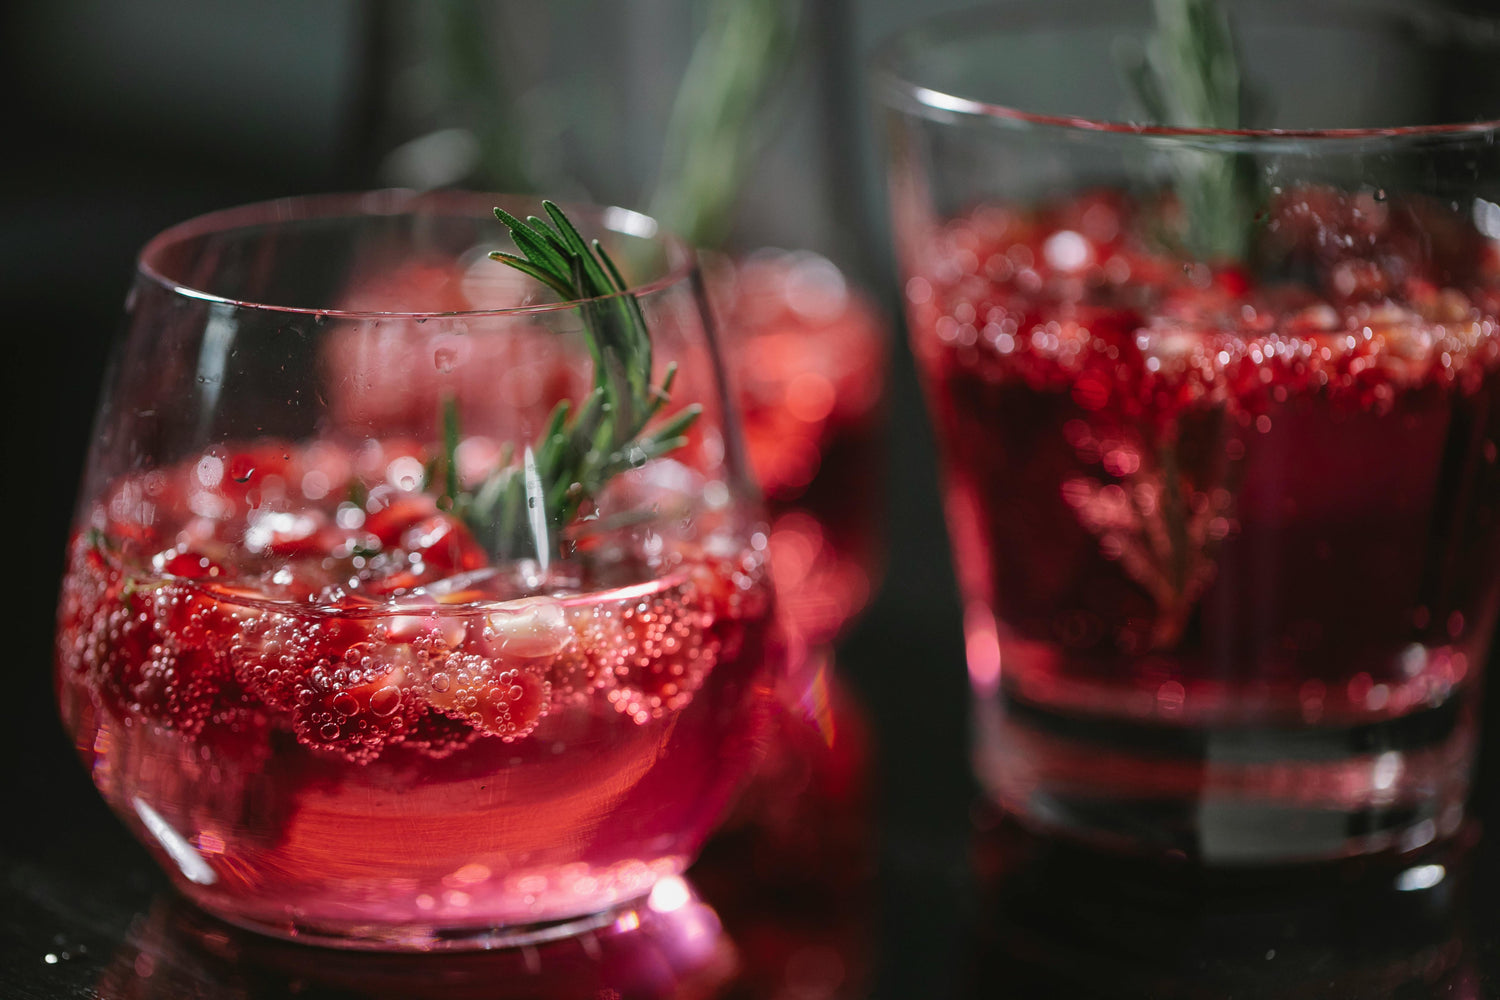 Unwind with a Berry Good Night: A Melatonin-Free Mocktail